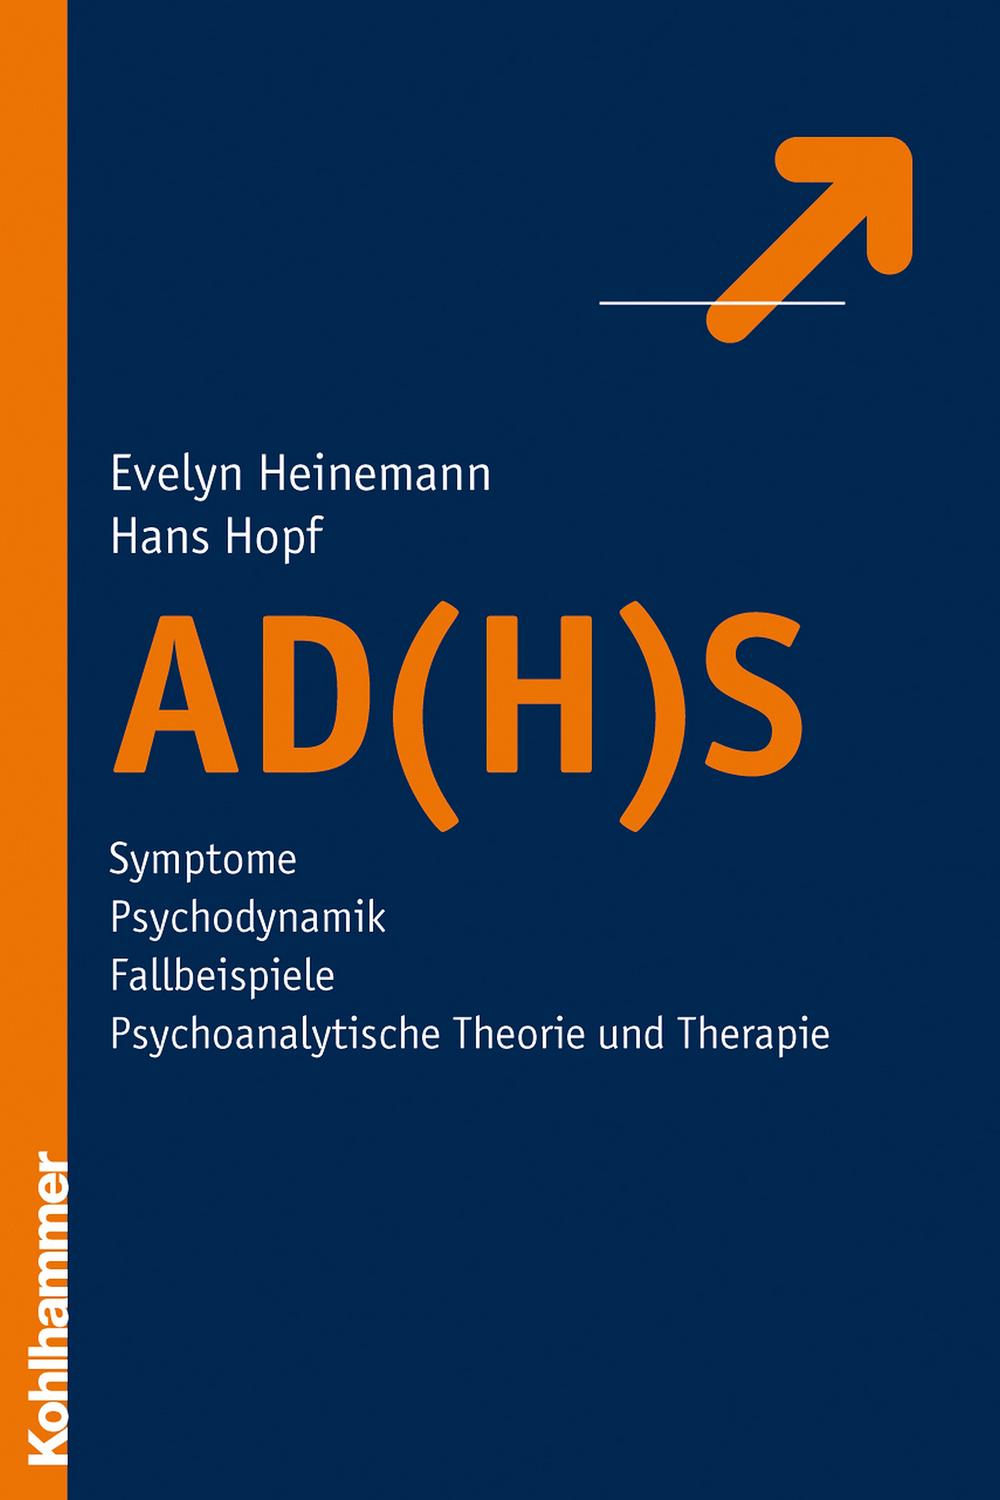 AD(H)S - Evelyn Heinemann, Hans Hopf